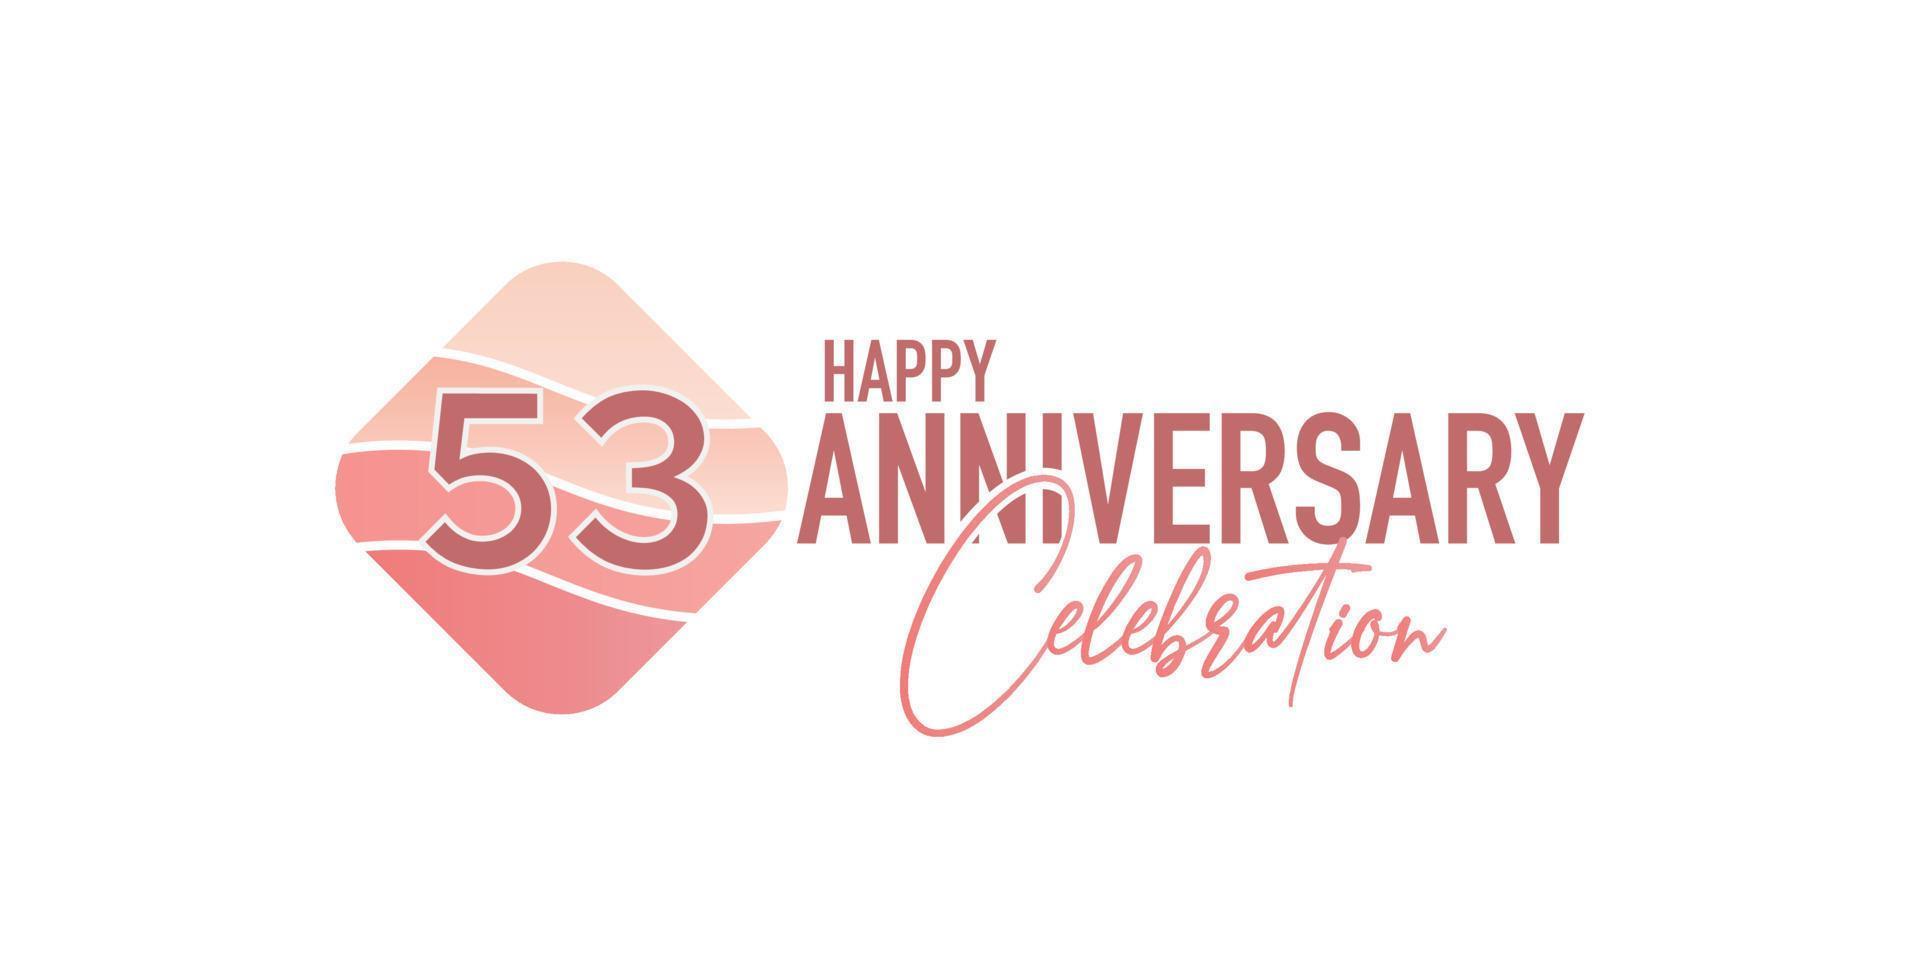 53 years anniversary logo vector illustration design celebration with pink geometric design